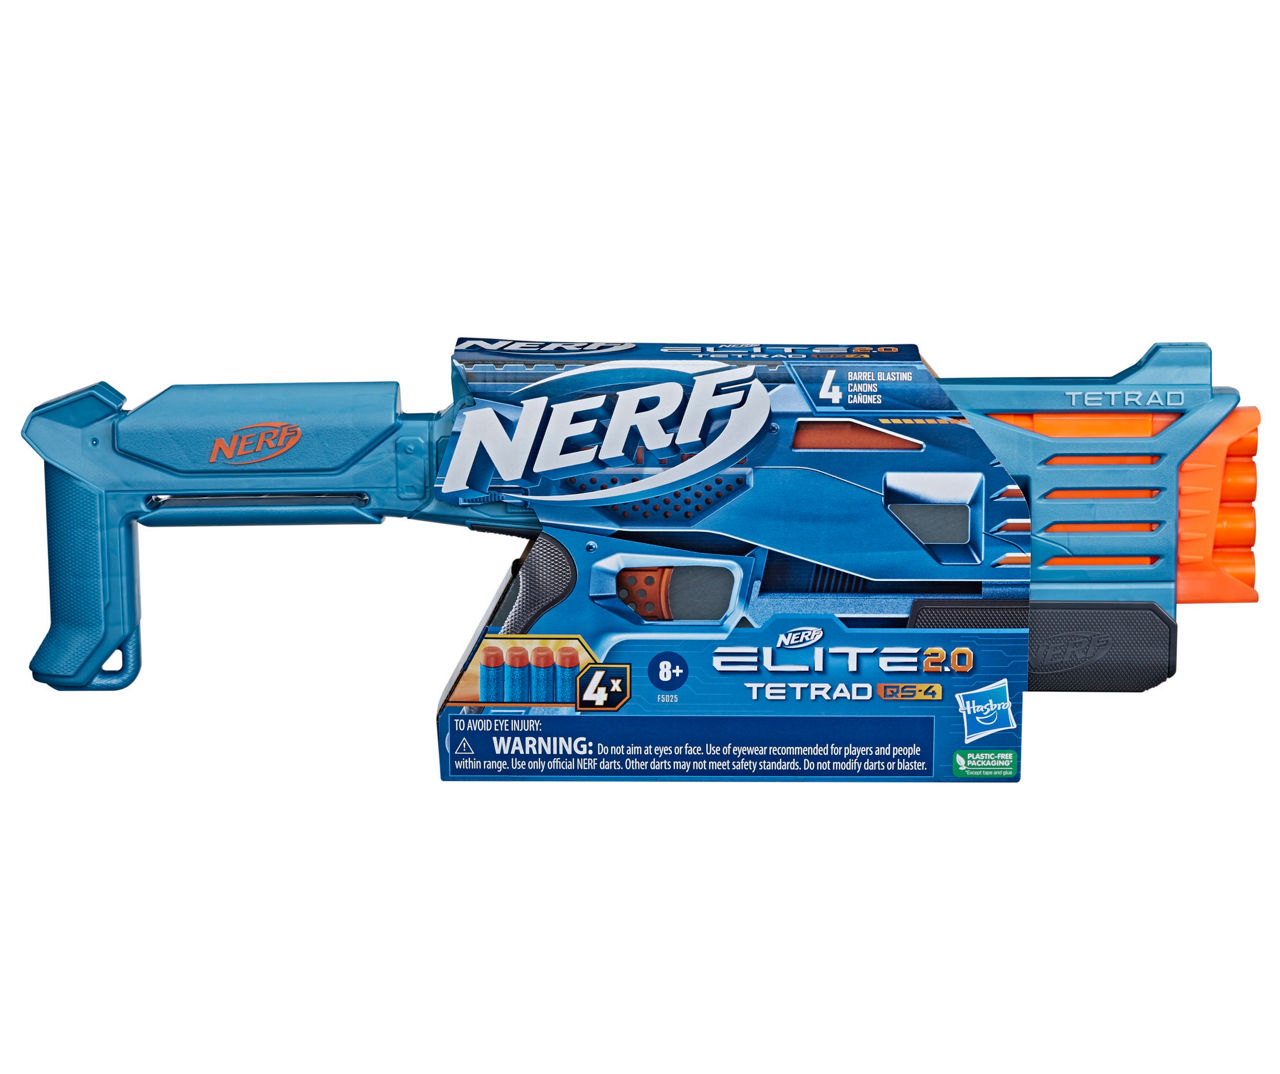 Forkludret tyv fysiker Nerf Elite 2.0 Tetrad QS-4 Blaster | Big Lots